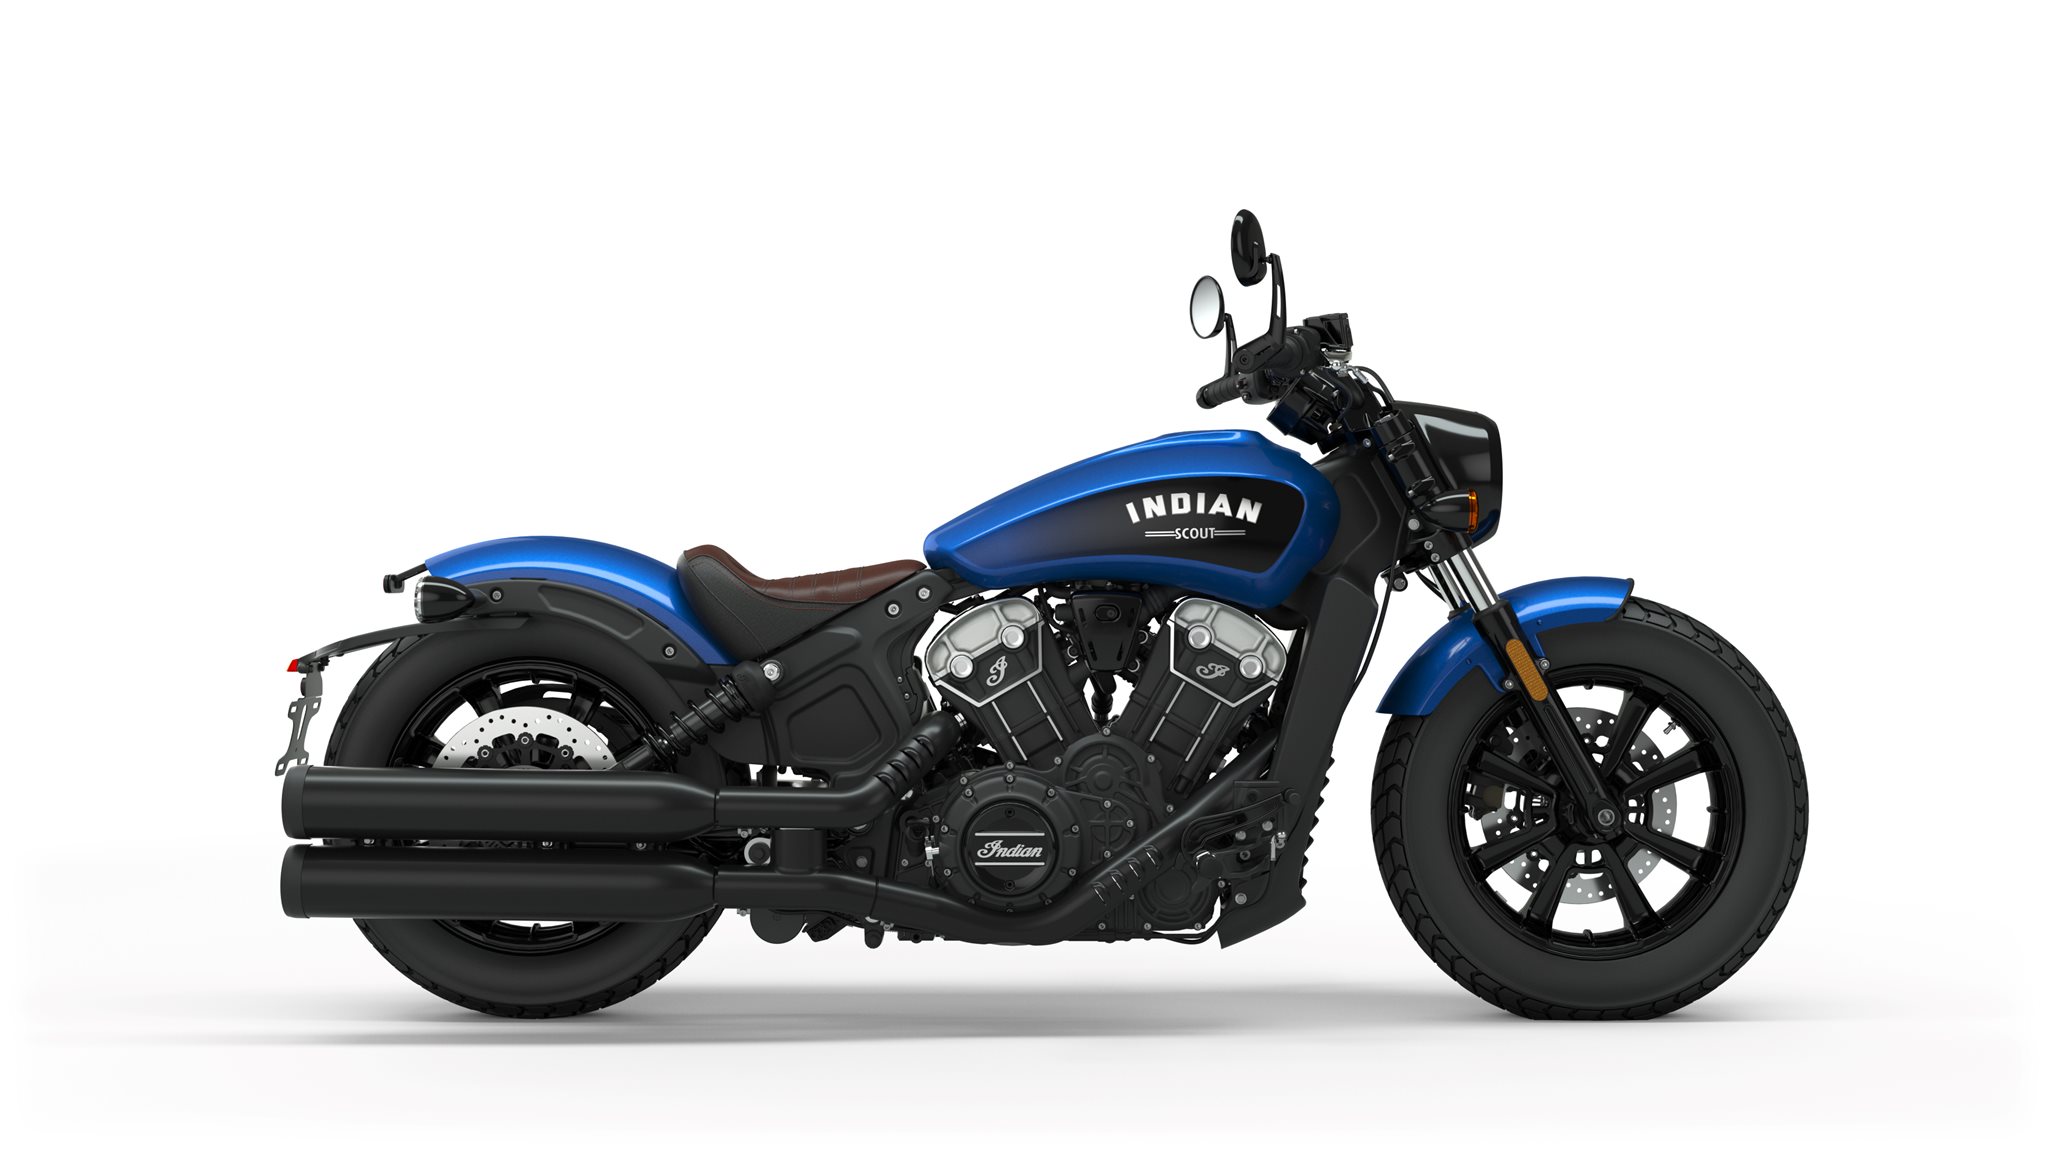 Motorrad Vergleich Indian Scout Bobber 2020 Vs Harley Davidson Softail Slim Fls 2015